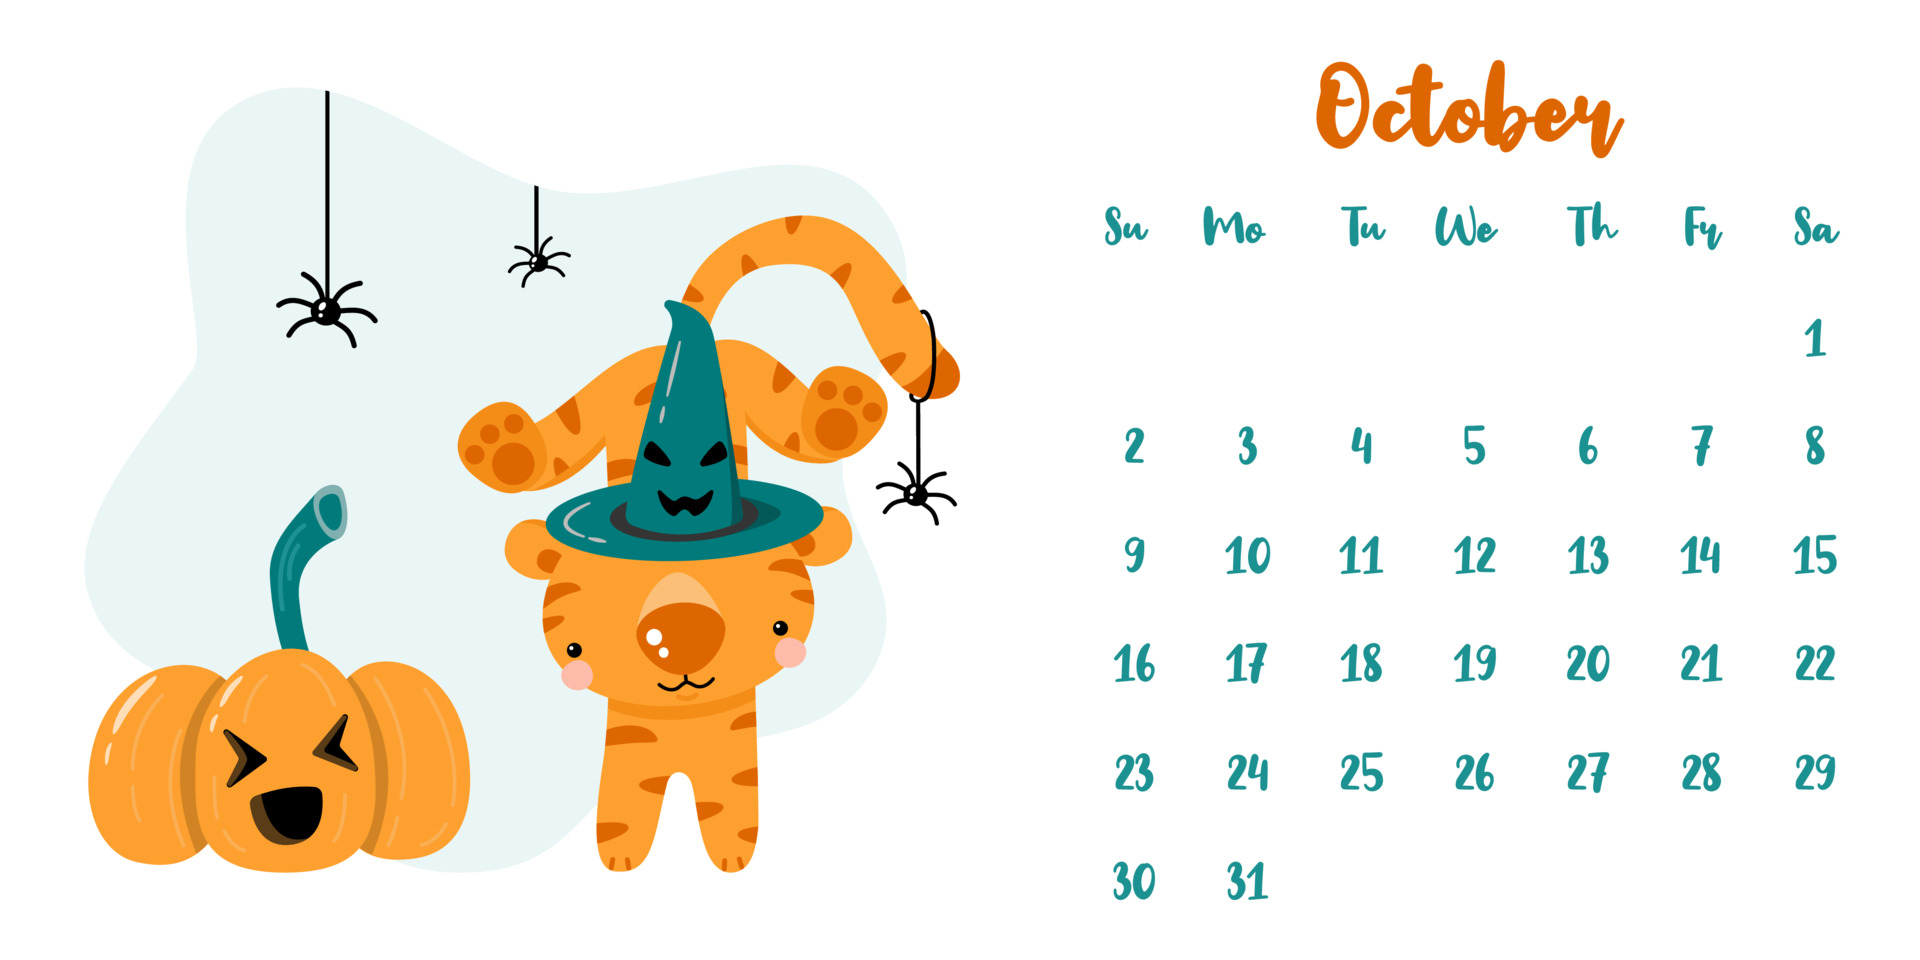 Halloween October 2022 Calendar Calendar For October 2022 With Cute Cartoon Tiger And Halloween Pumpkin  3479940 Vector Art At Vecteezy